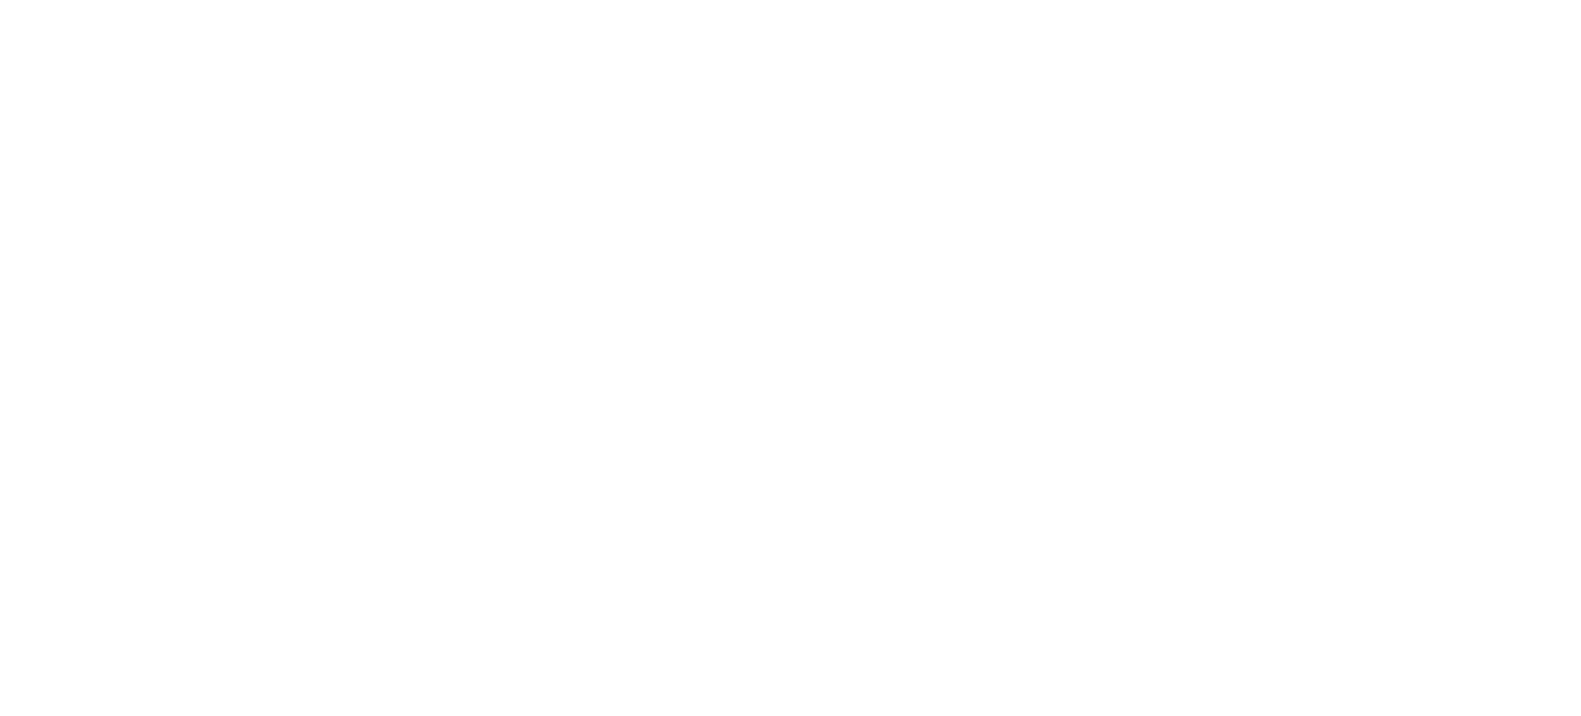 Walk London Logo